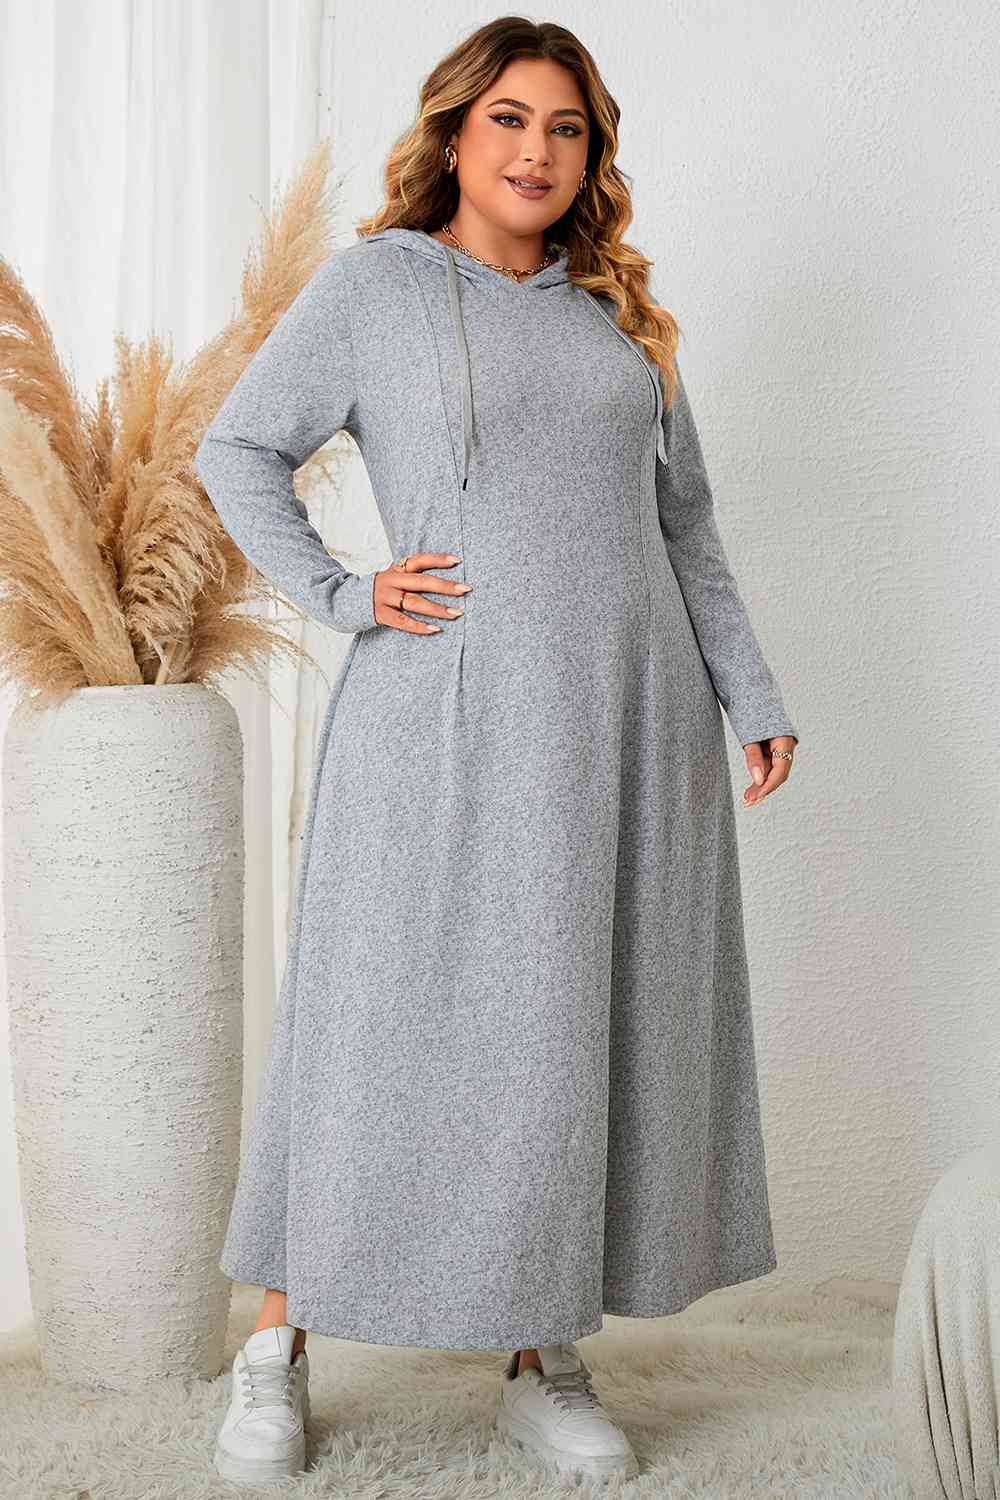 TEEK - Heather Grey Plus Size Long Sleeve Hooded Dress DRESS TEEK Trend 1XL  